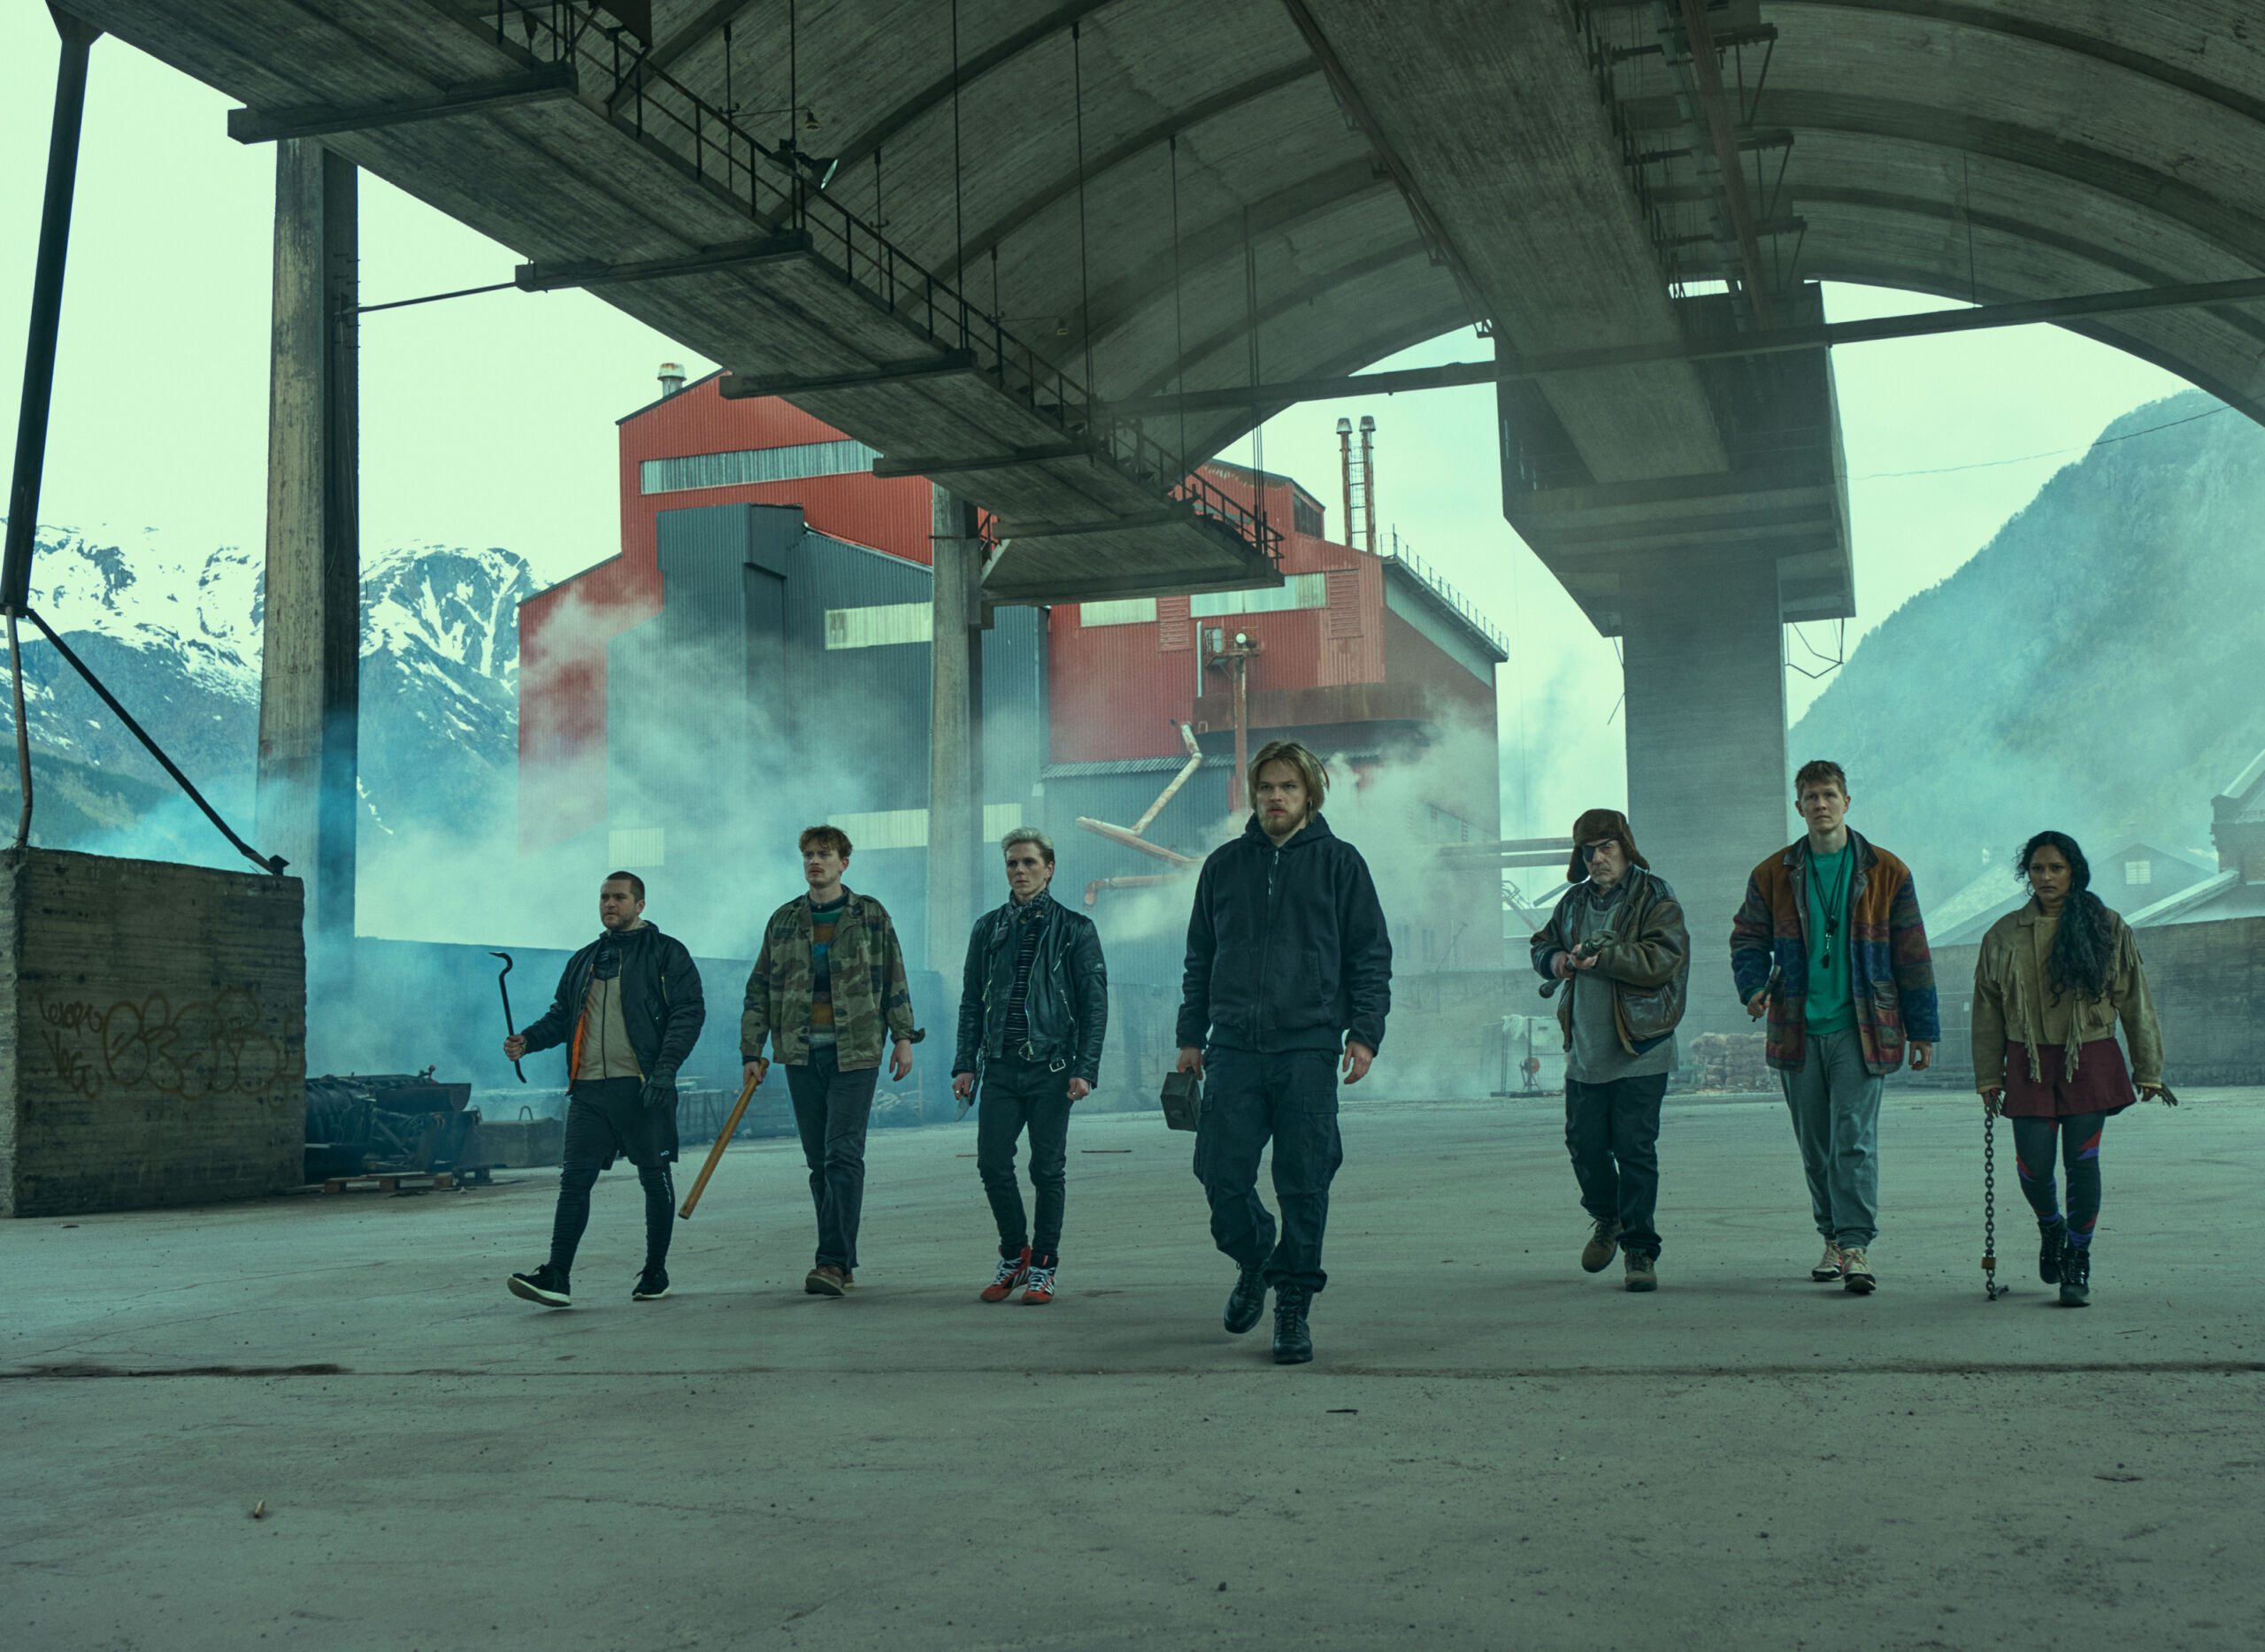 How Netflix's Ragnarok Sets Up Season 3